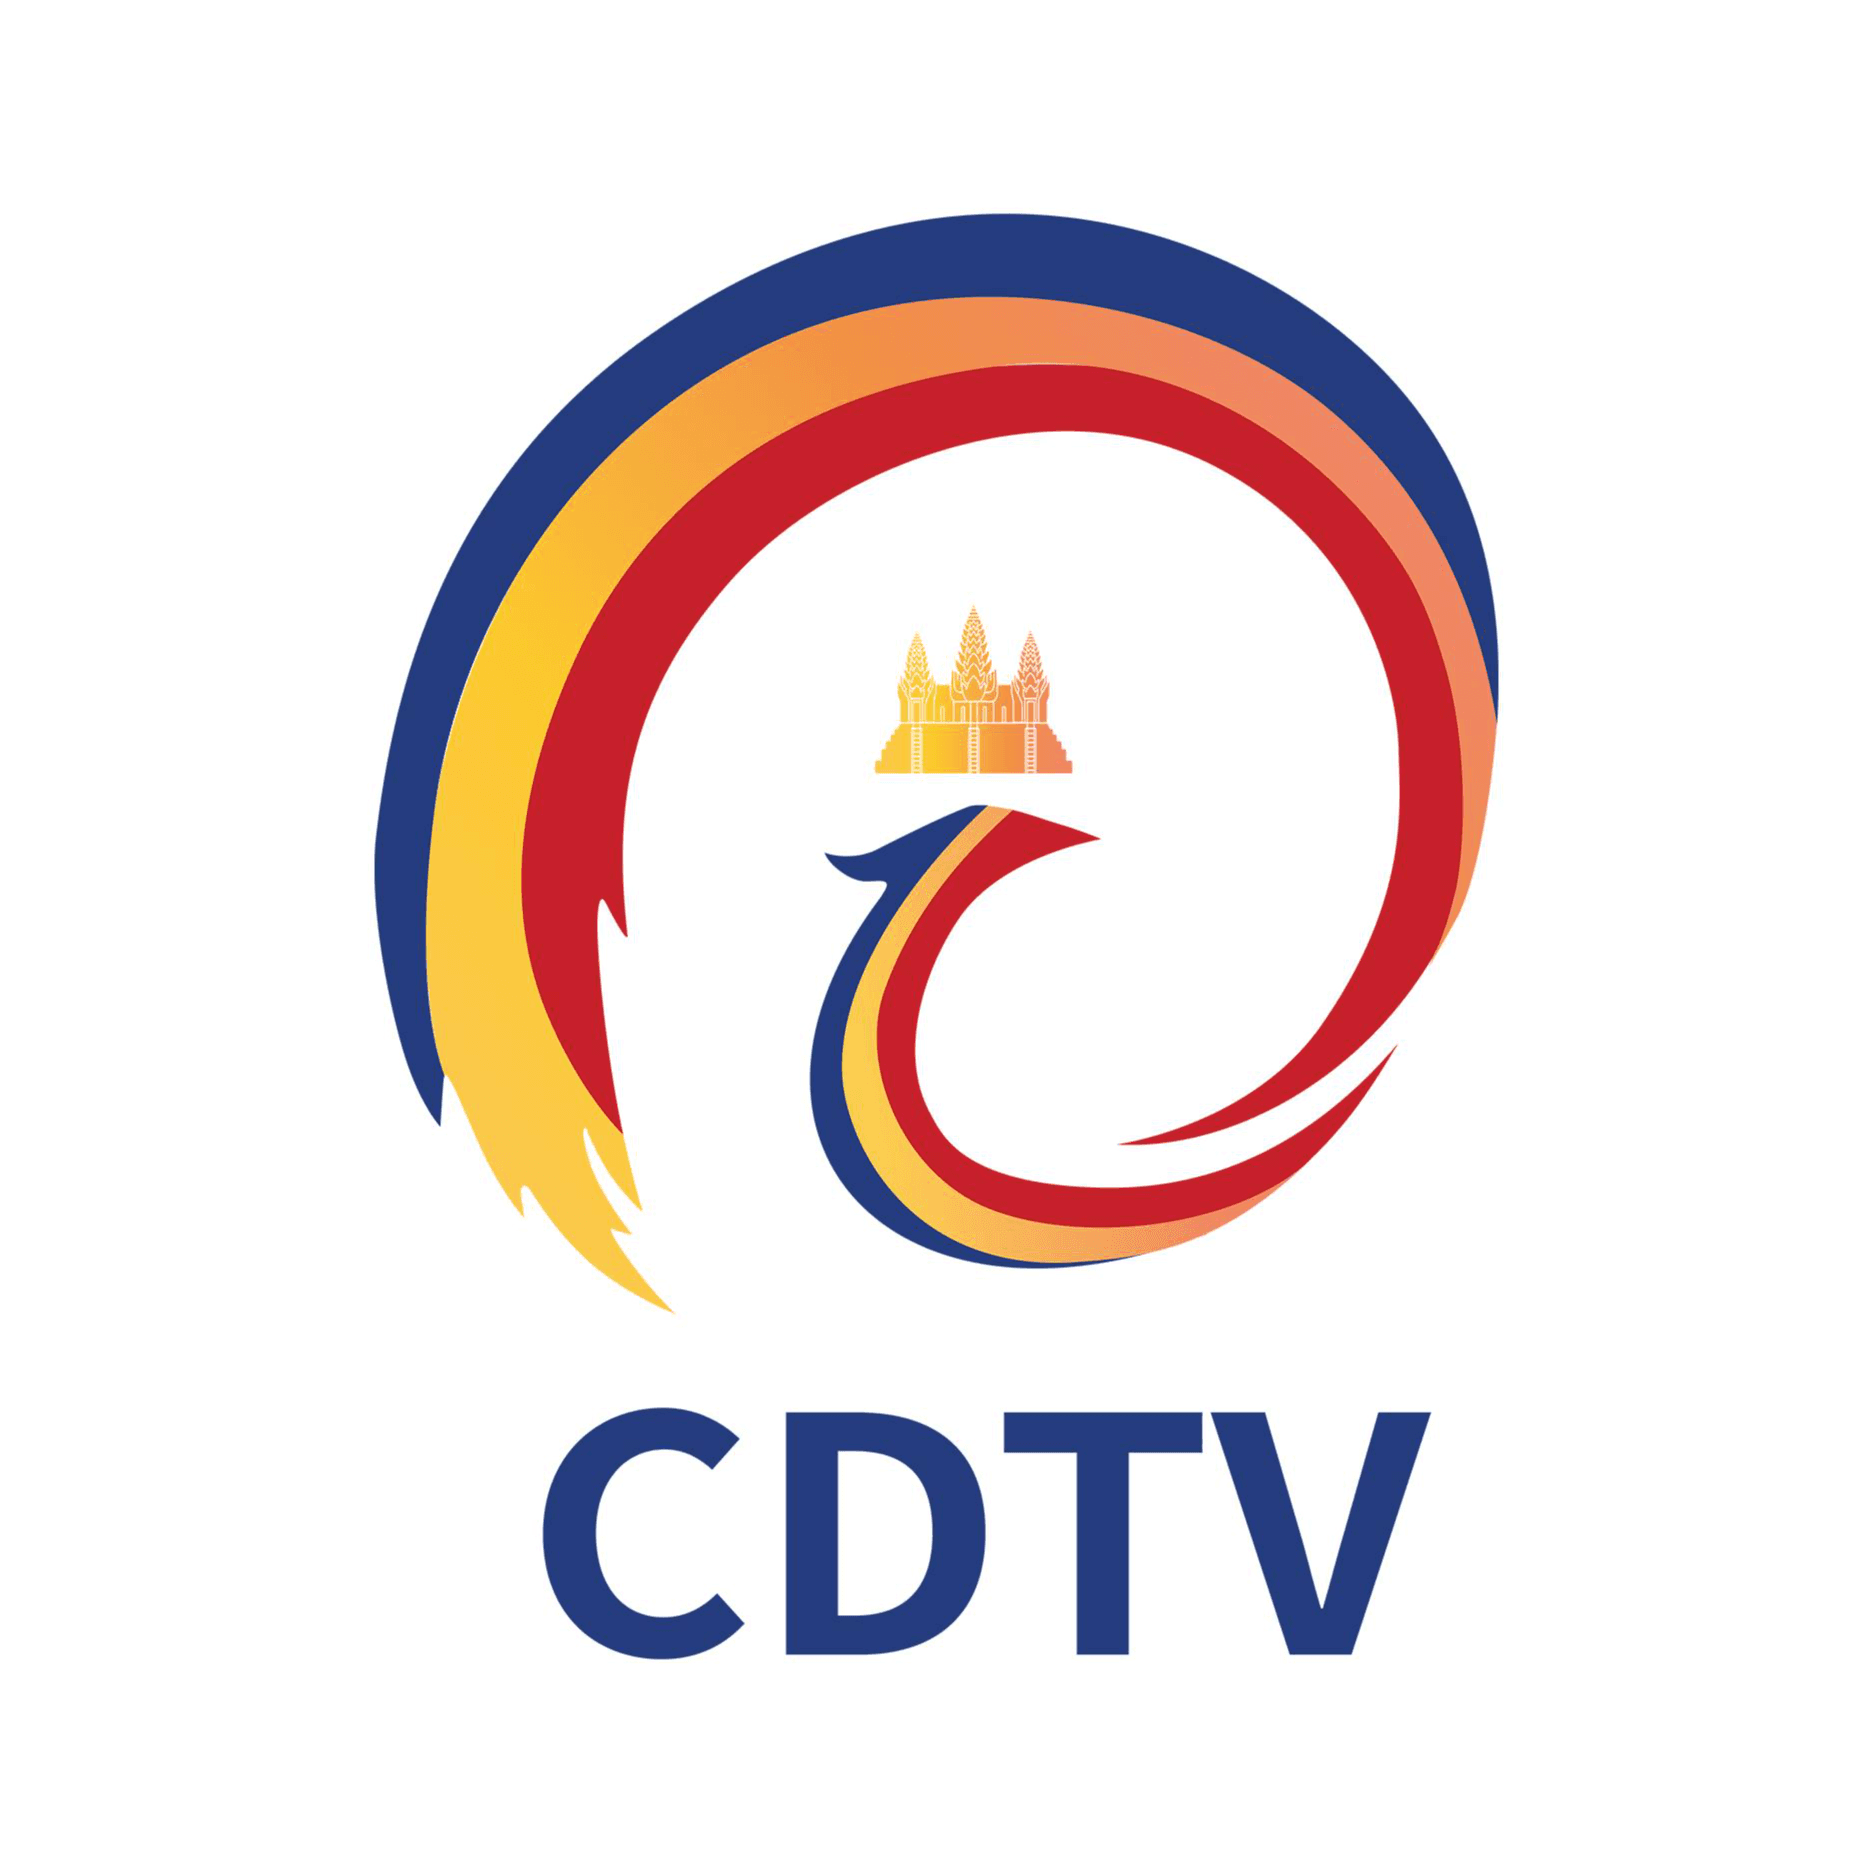 Cambodia Digital TV Co.,LTD